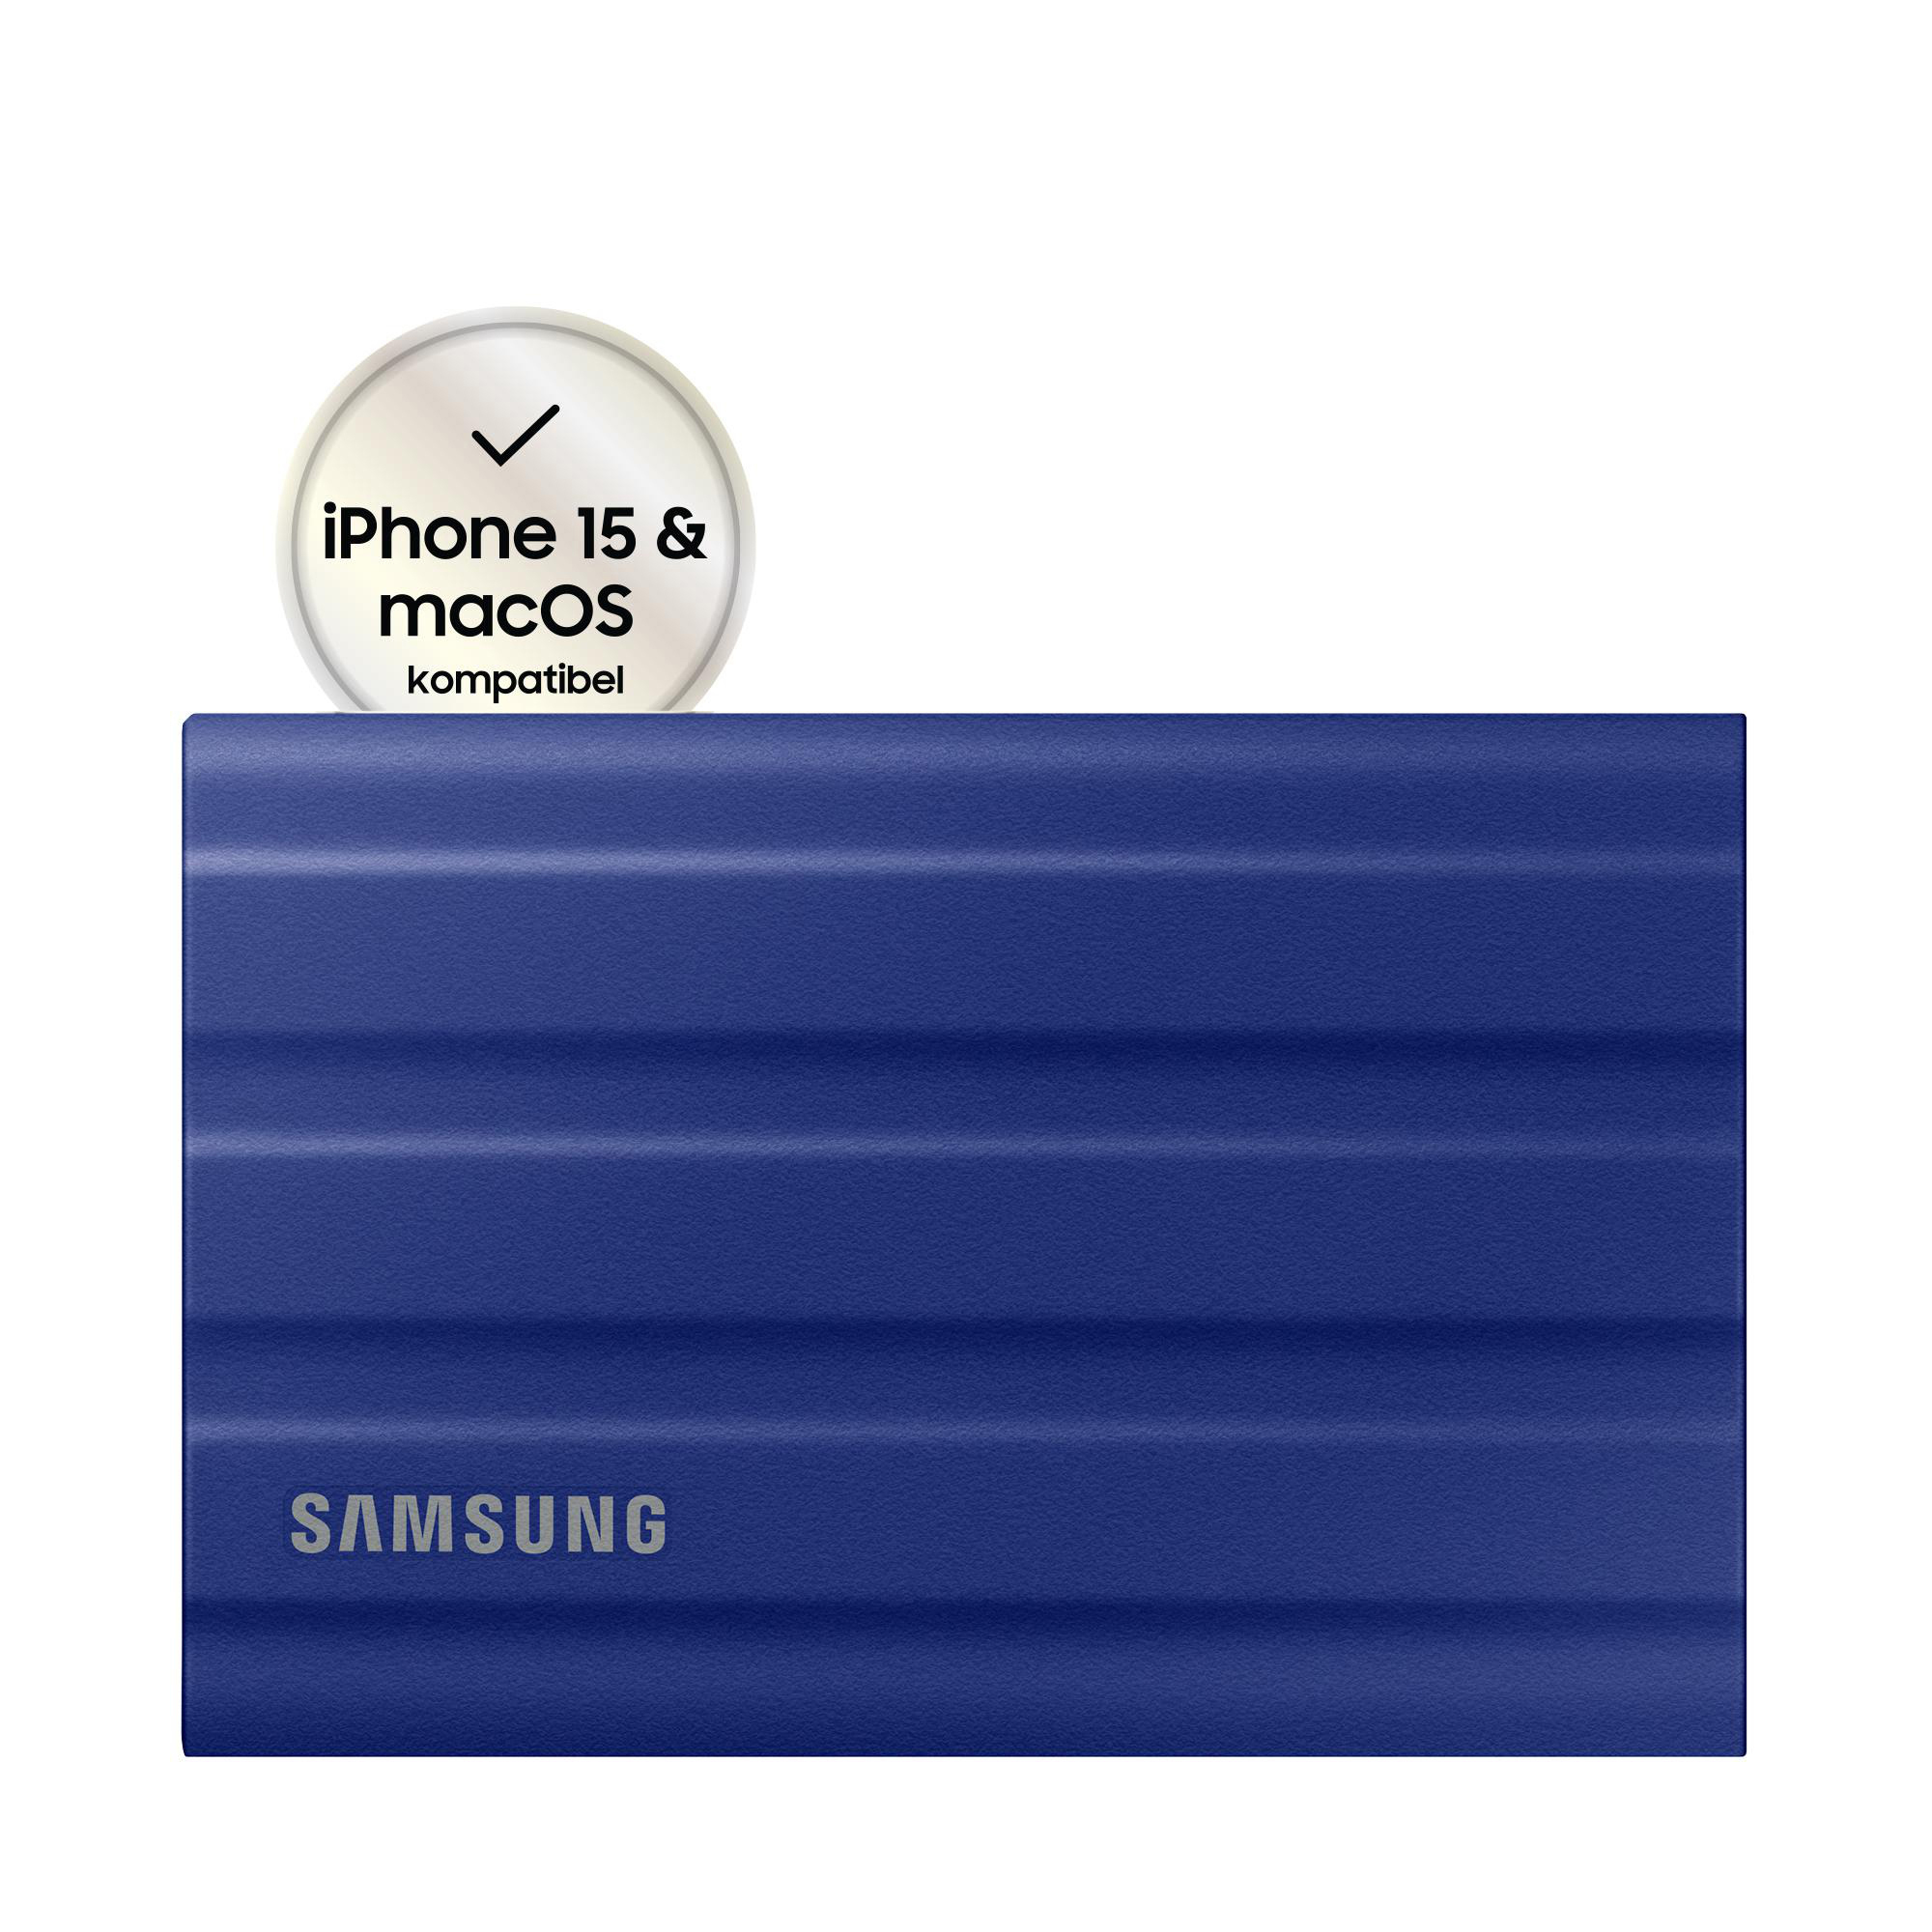 PC/Mac Festplatte, Blau SAMSUNG Shield Portable SSD, extern, TB SSD T7 1